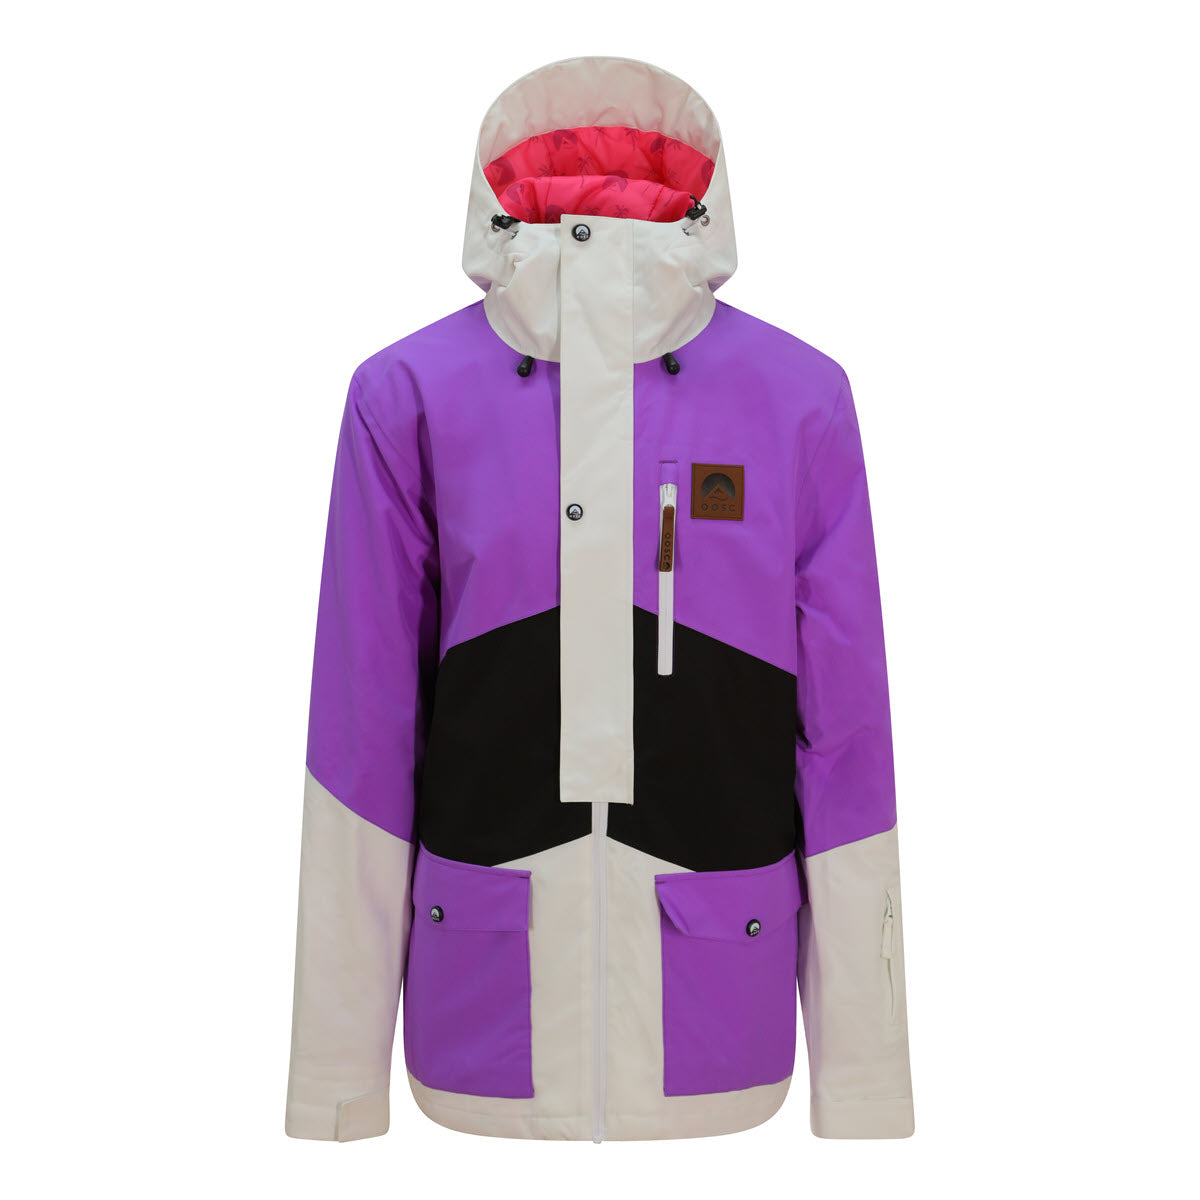 White, Purple & Black Mens Ski Jacket - OOSC Clothing